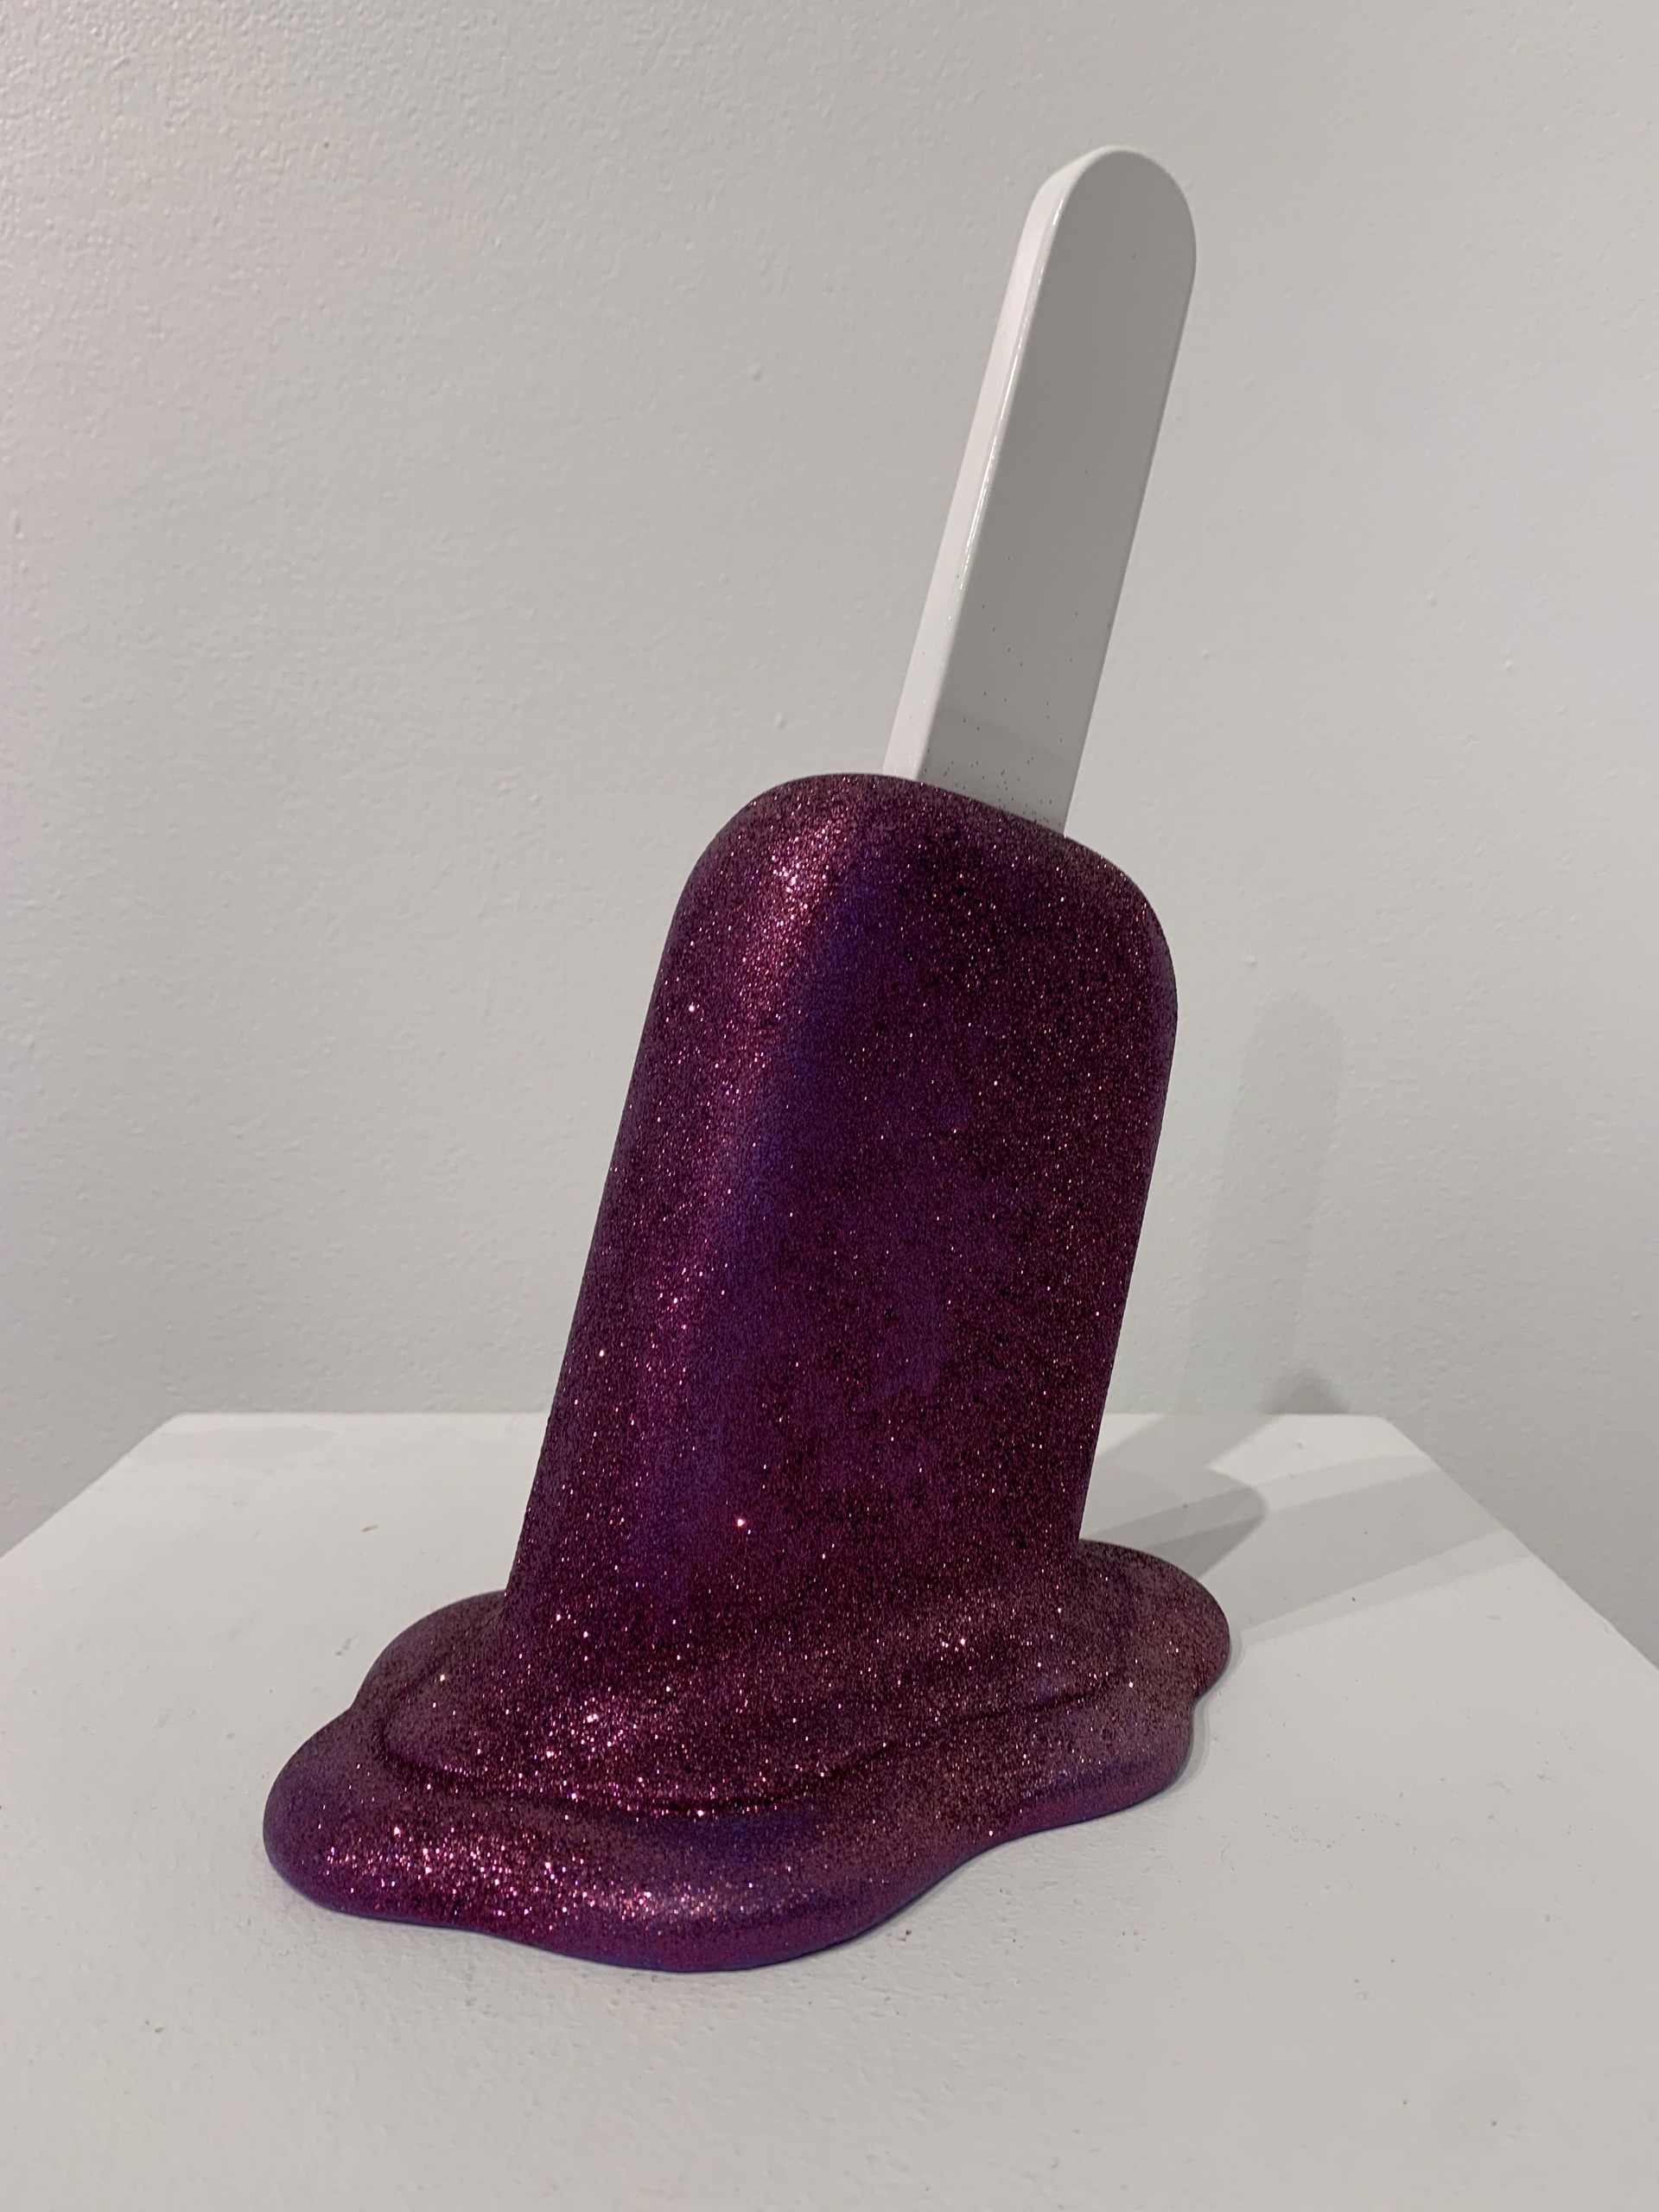 The Sweet Life Glitter Purple Popsicle by Elena Bulatova